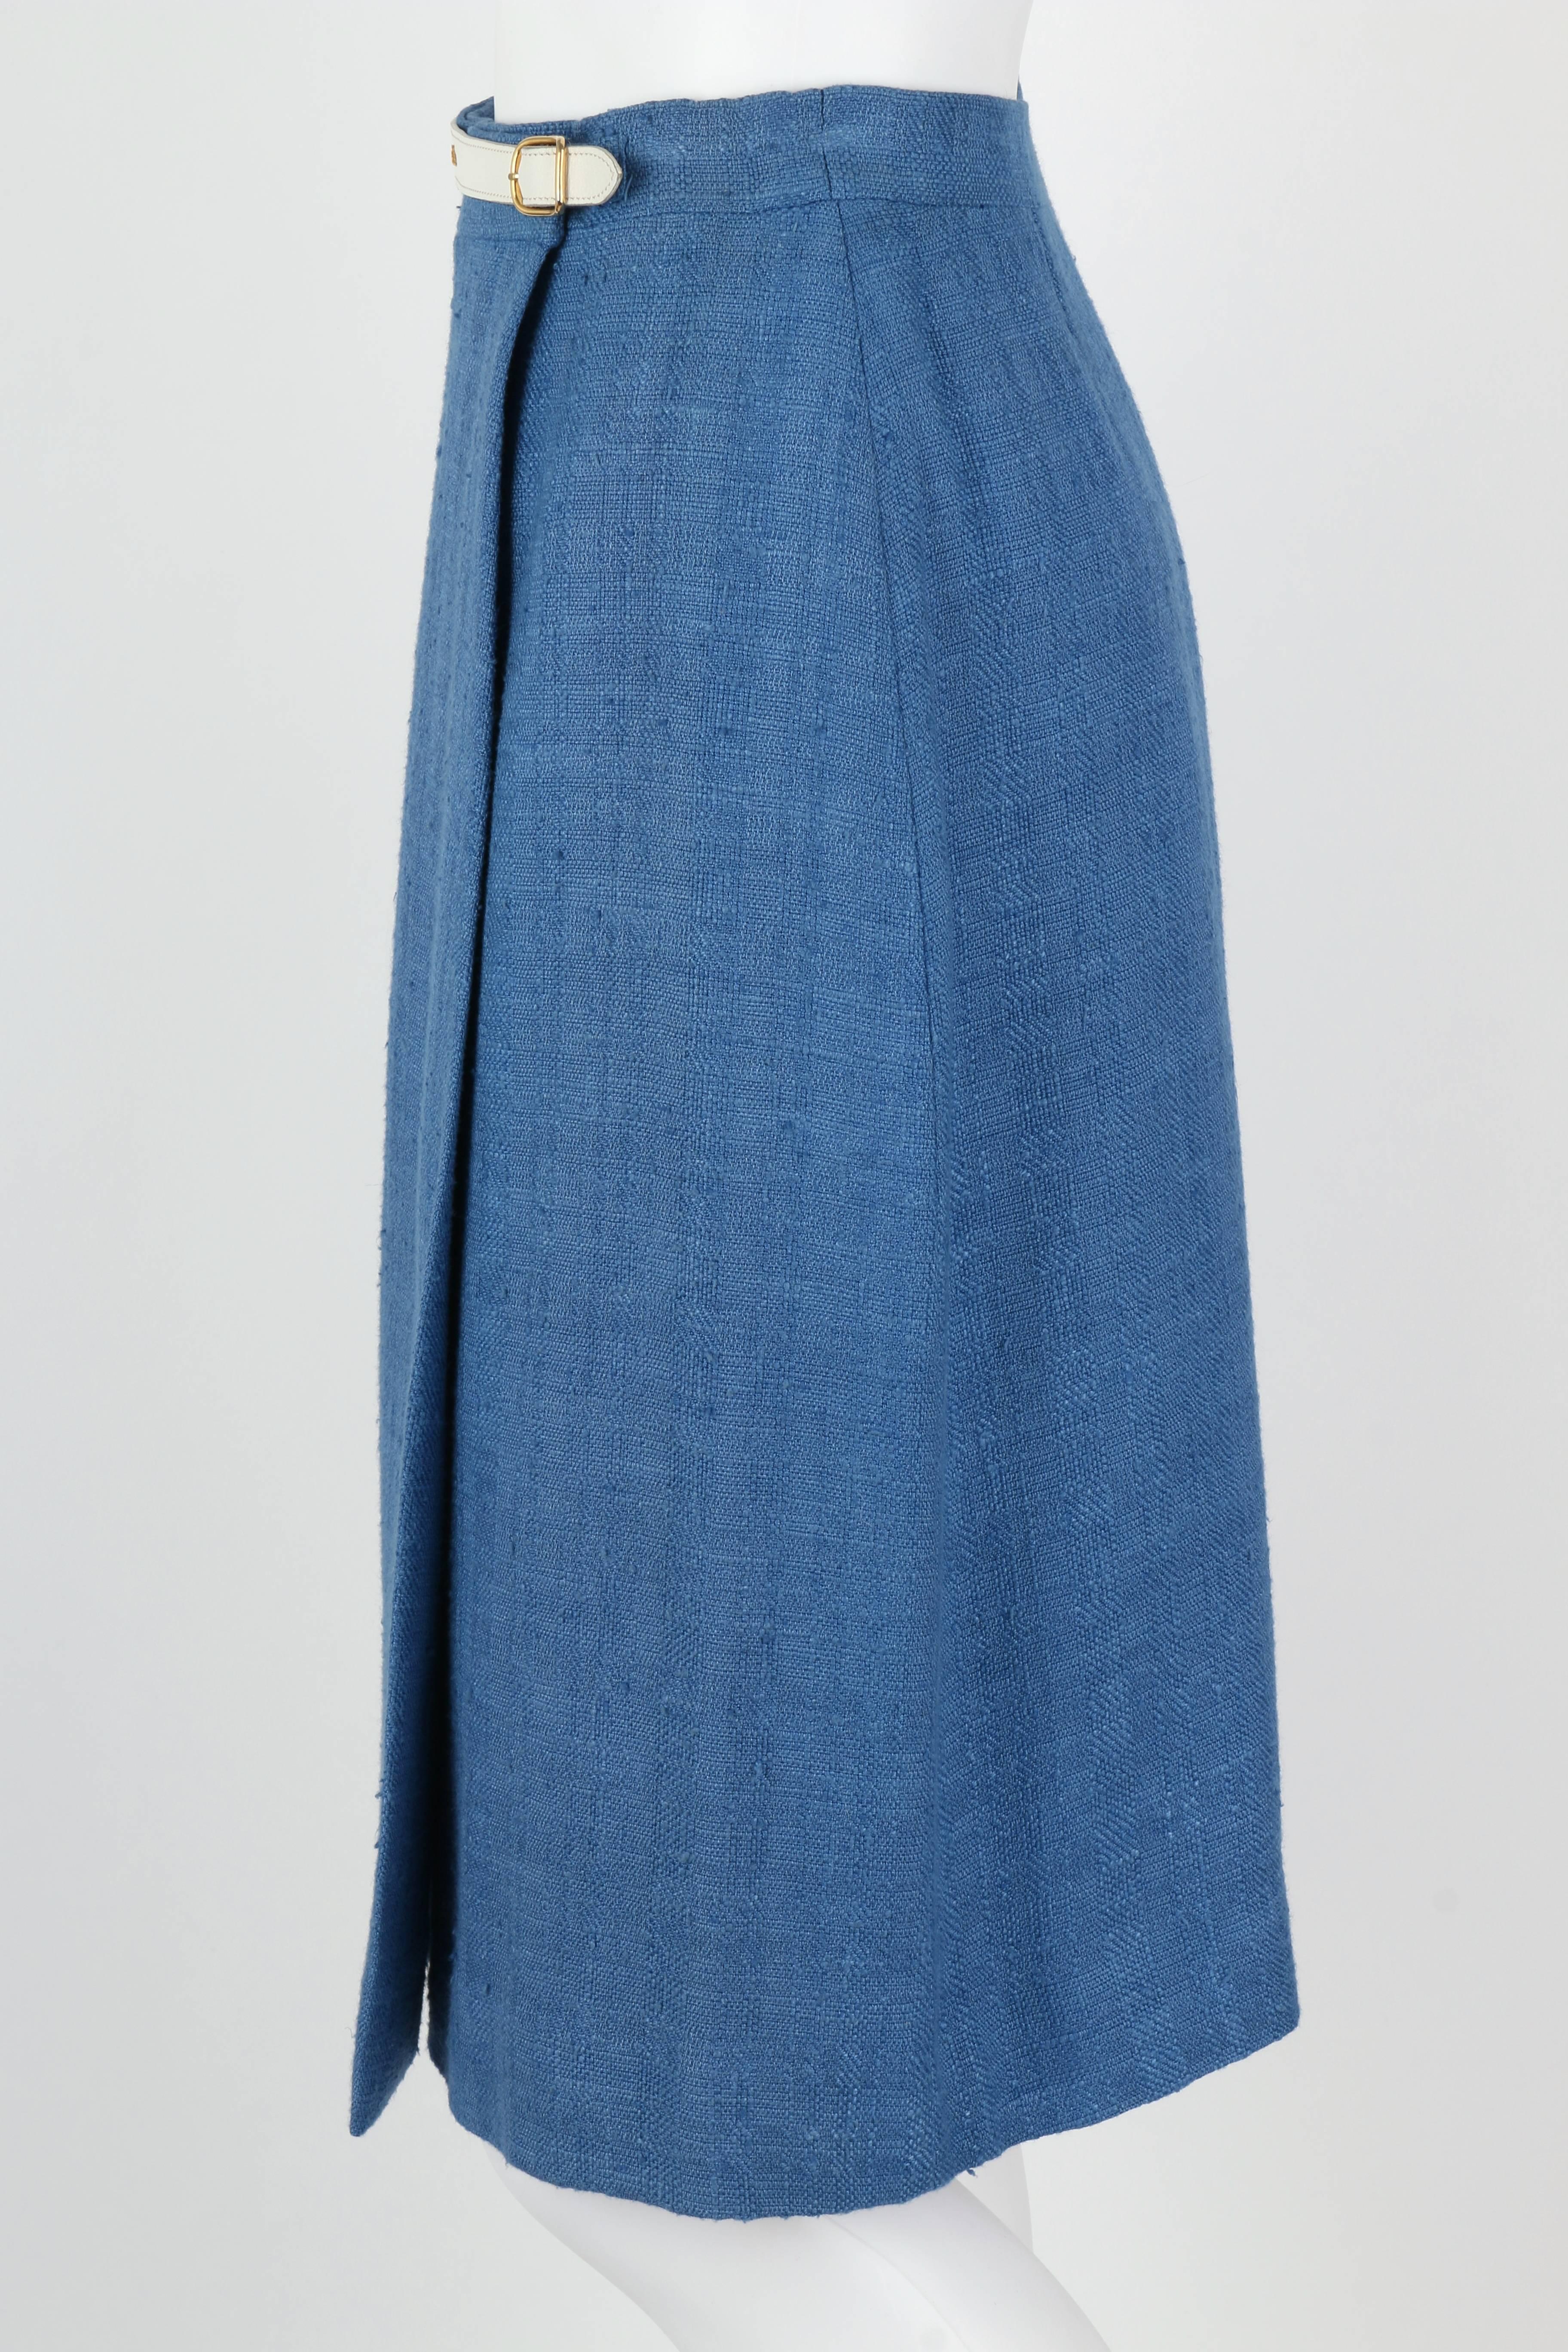 HERMES PARIS c.1980's Blue Tweed Wrap Skirt White Leather Belt Detail Size 38 1